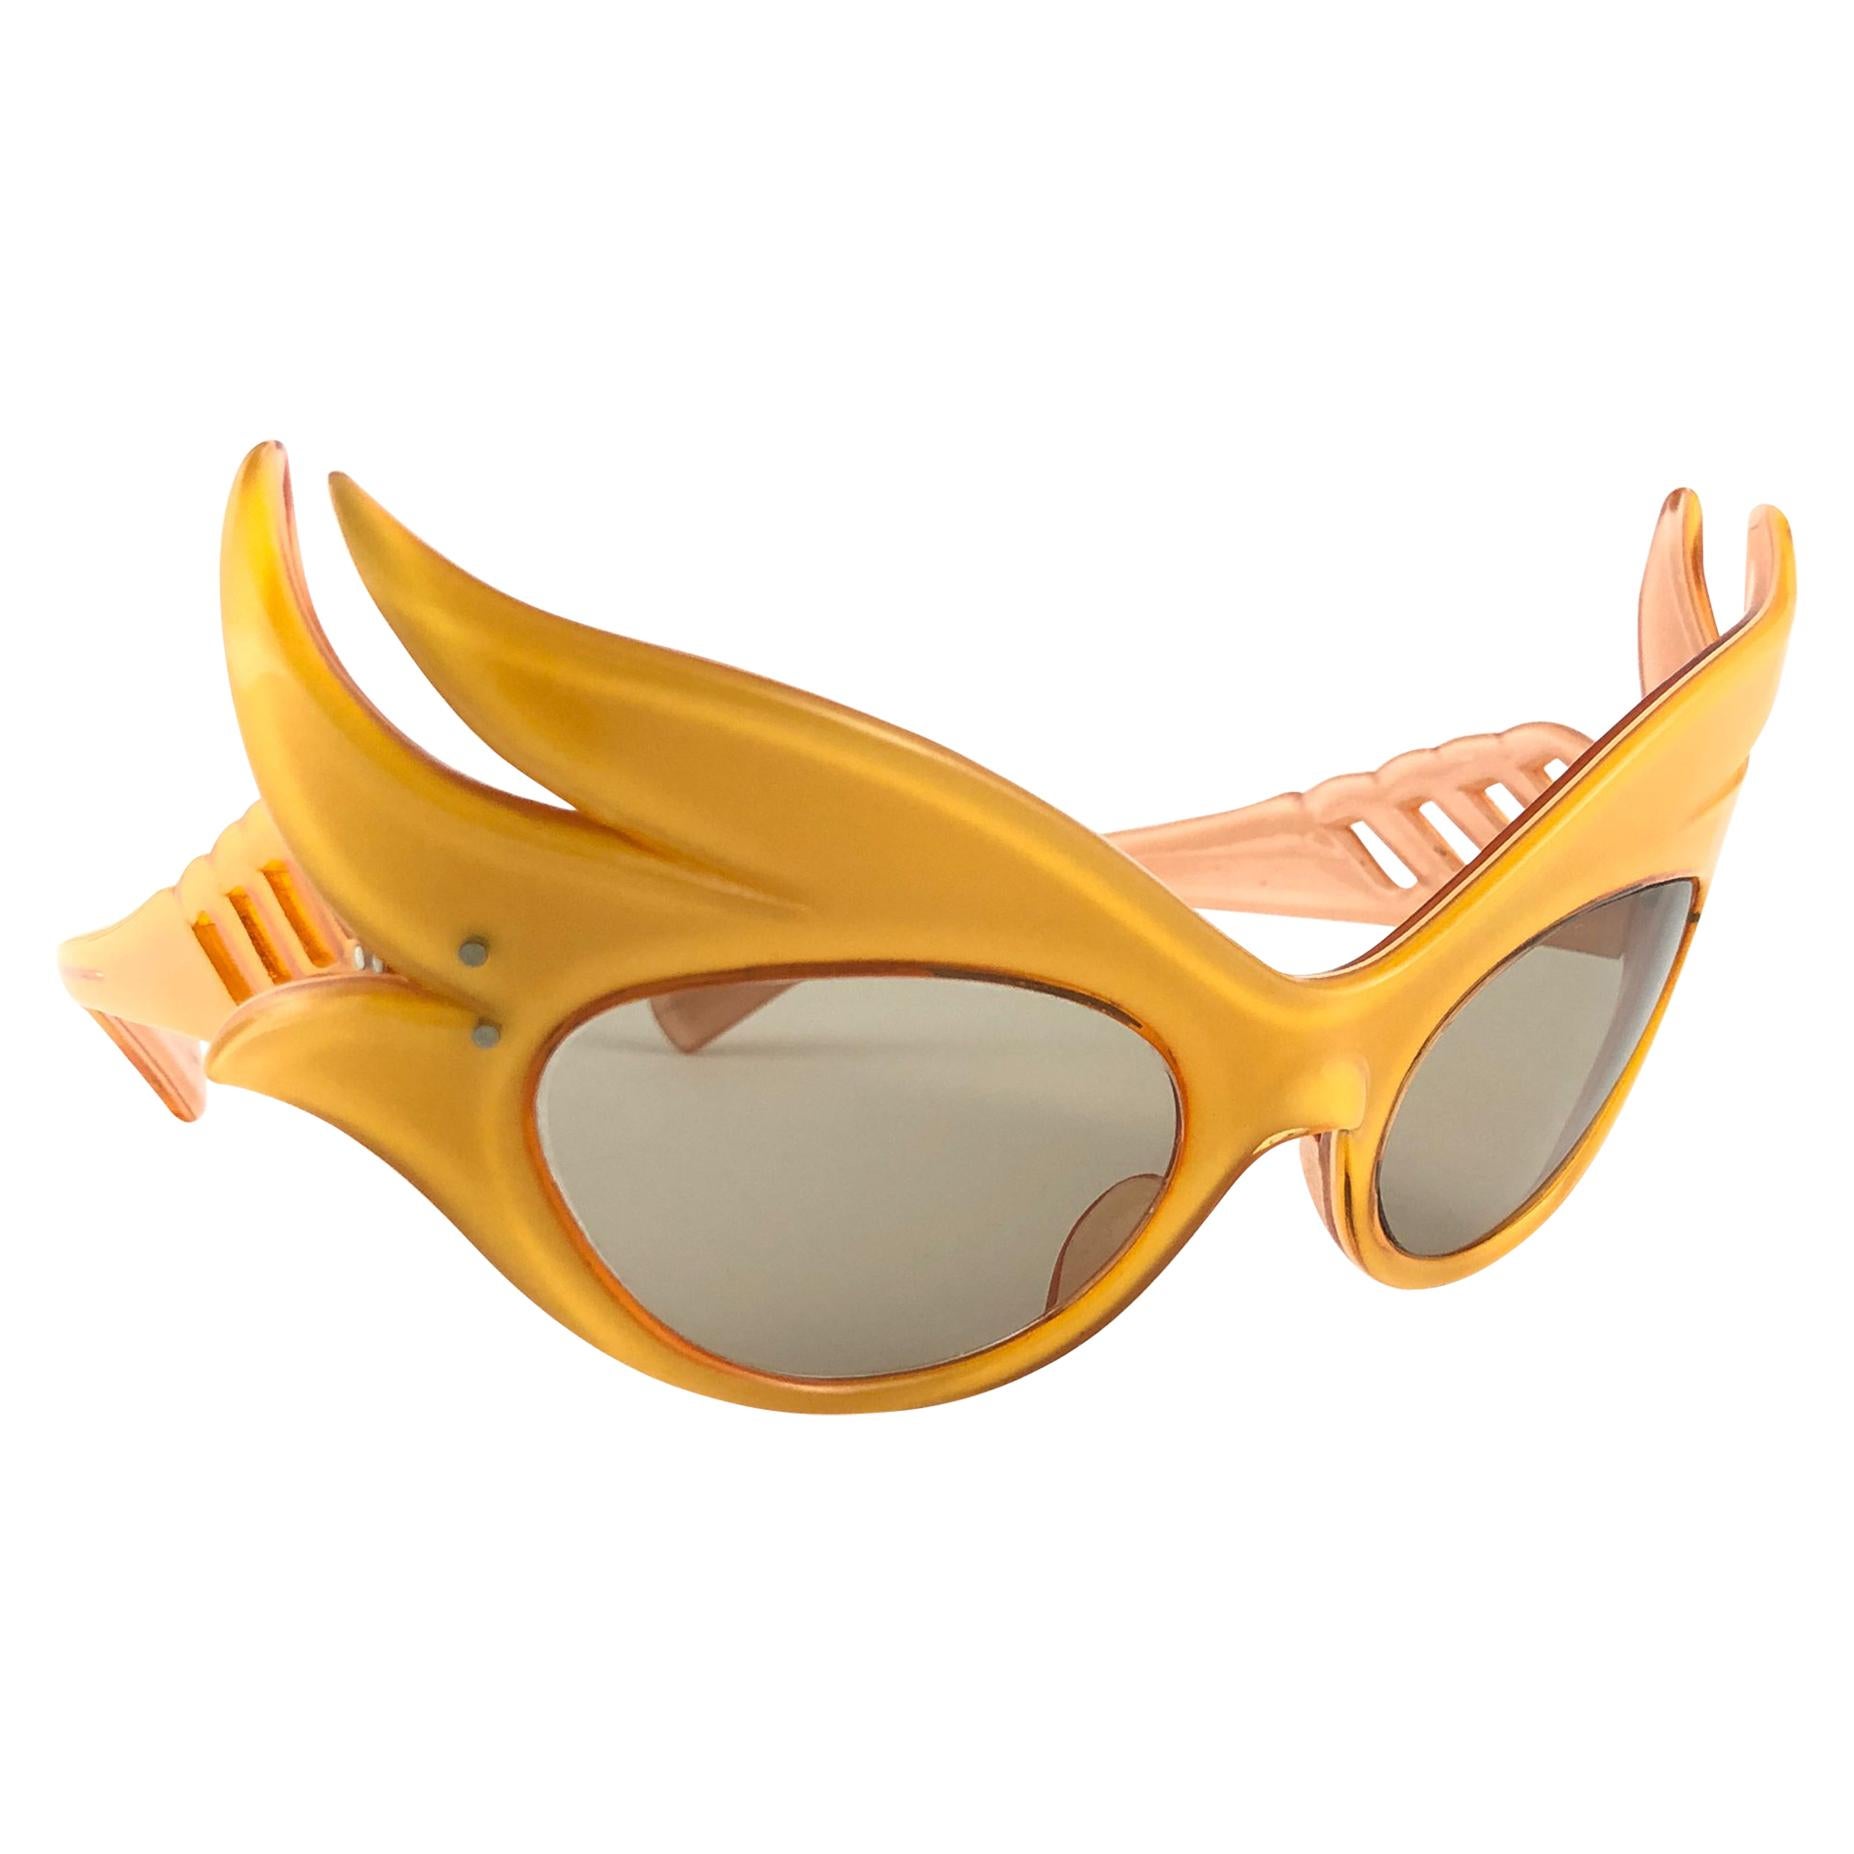 Vintage Rare Alain Mikli Prototype Flaming Phoenix France Sunglasses 1988